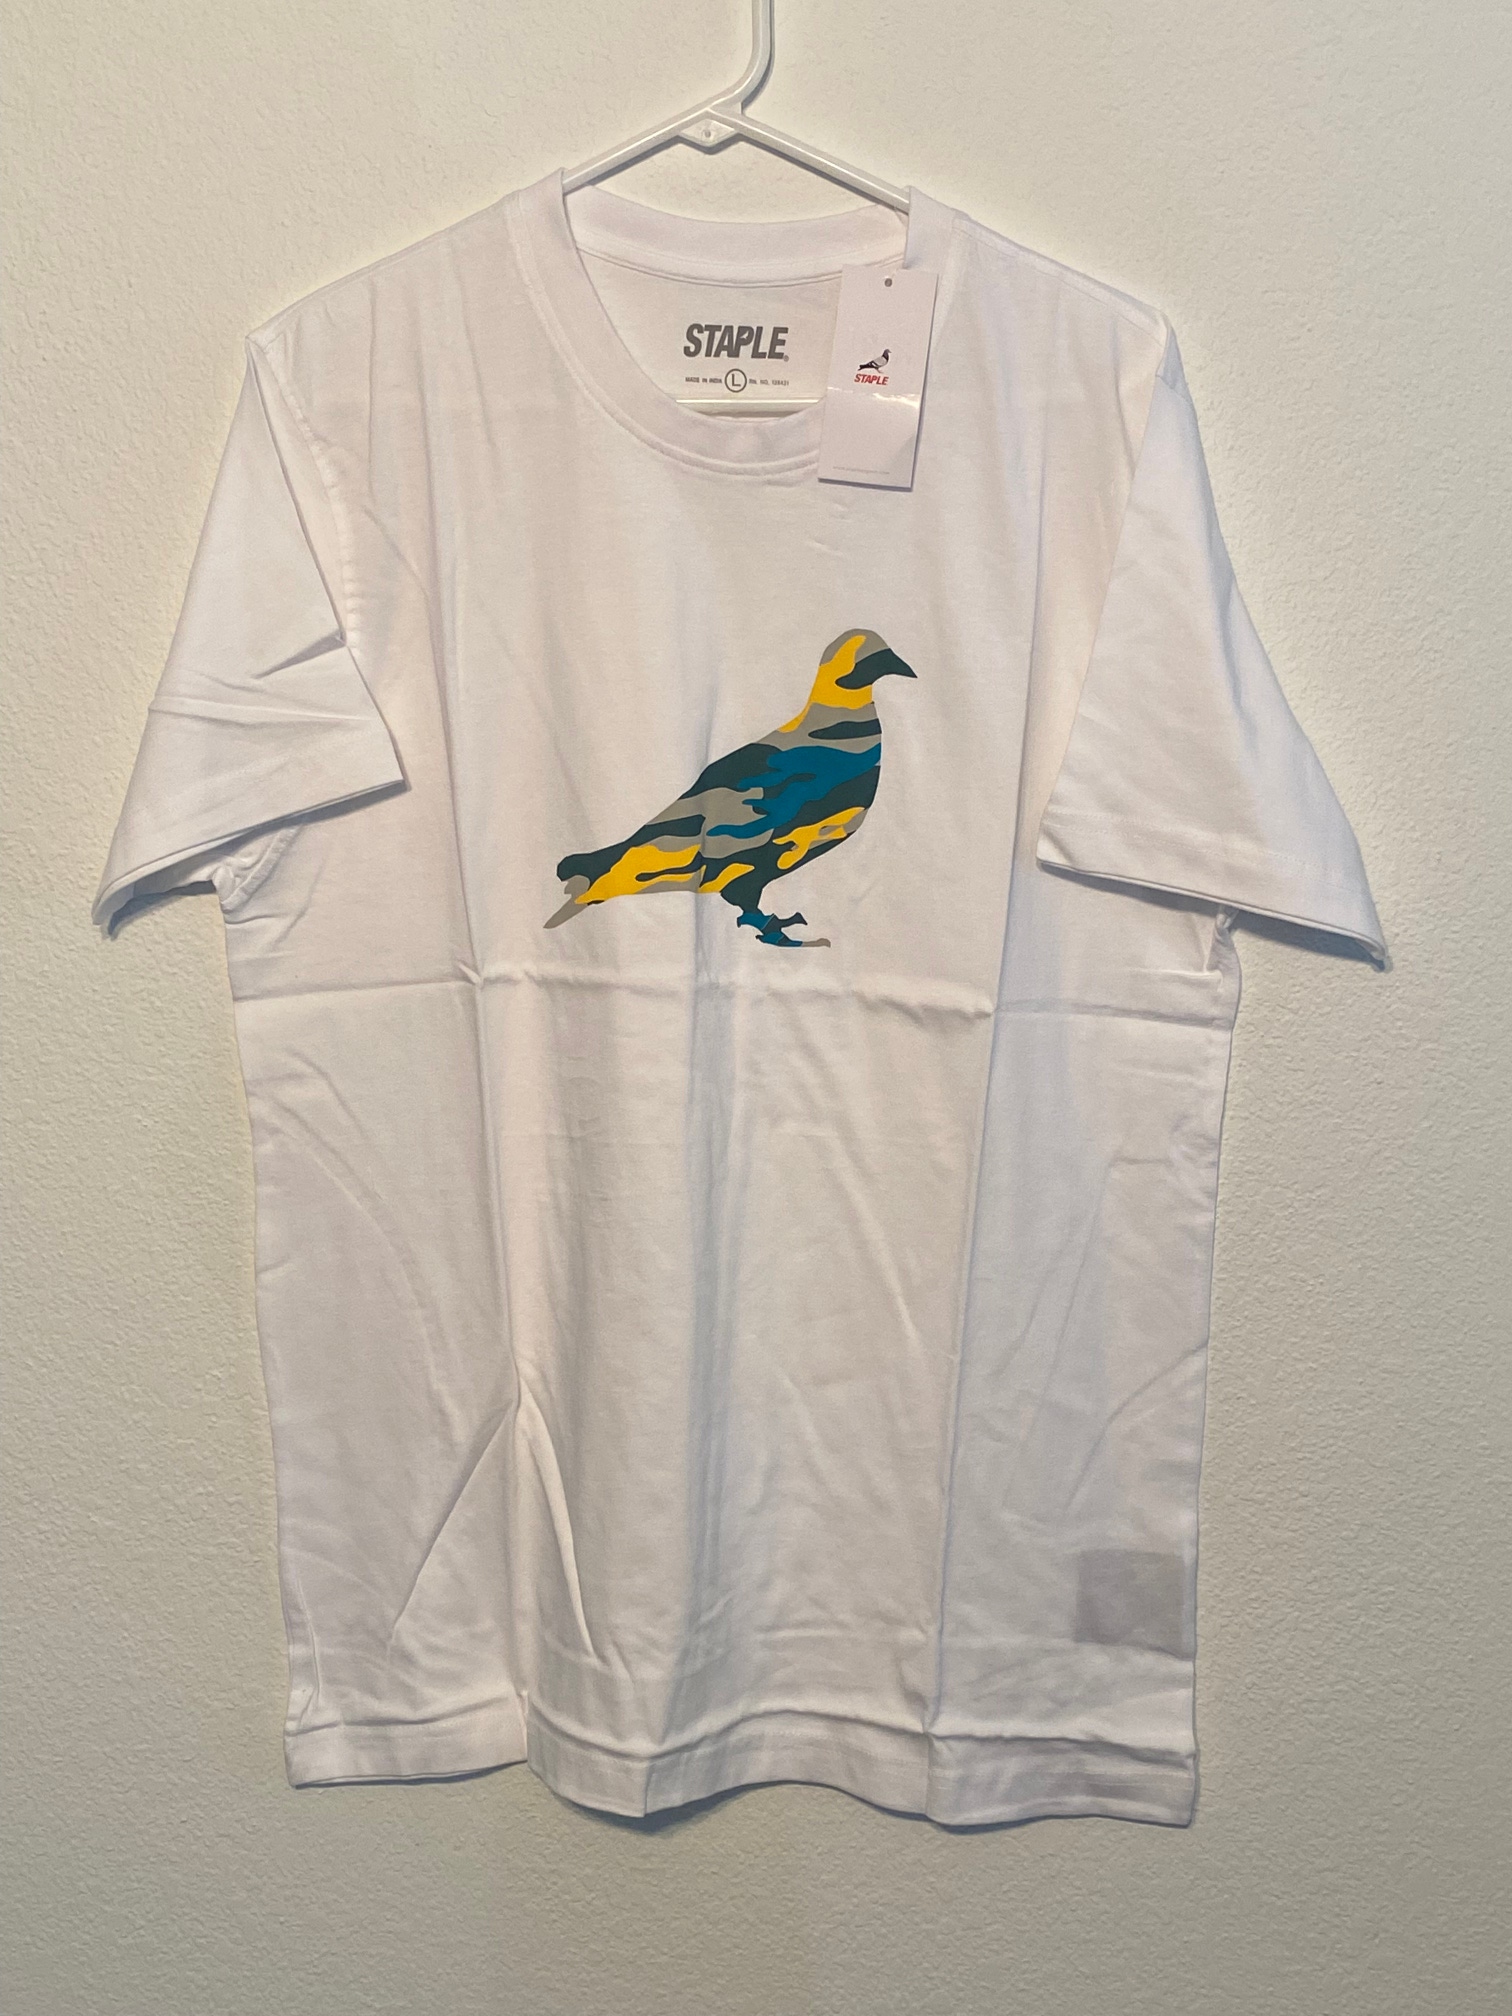 Staple Pigeon NYC Underhill Camo Logo Size L Casual Skateboarding T Shirt New